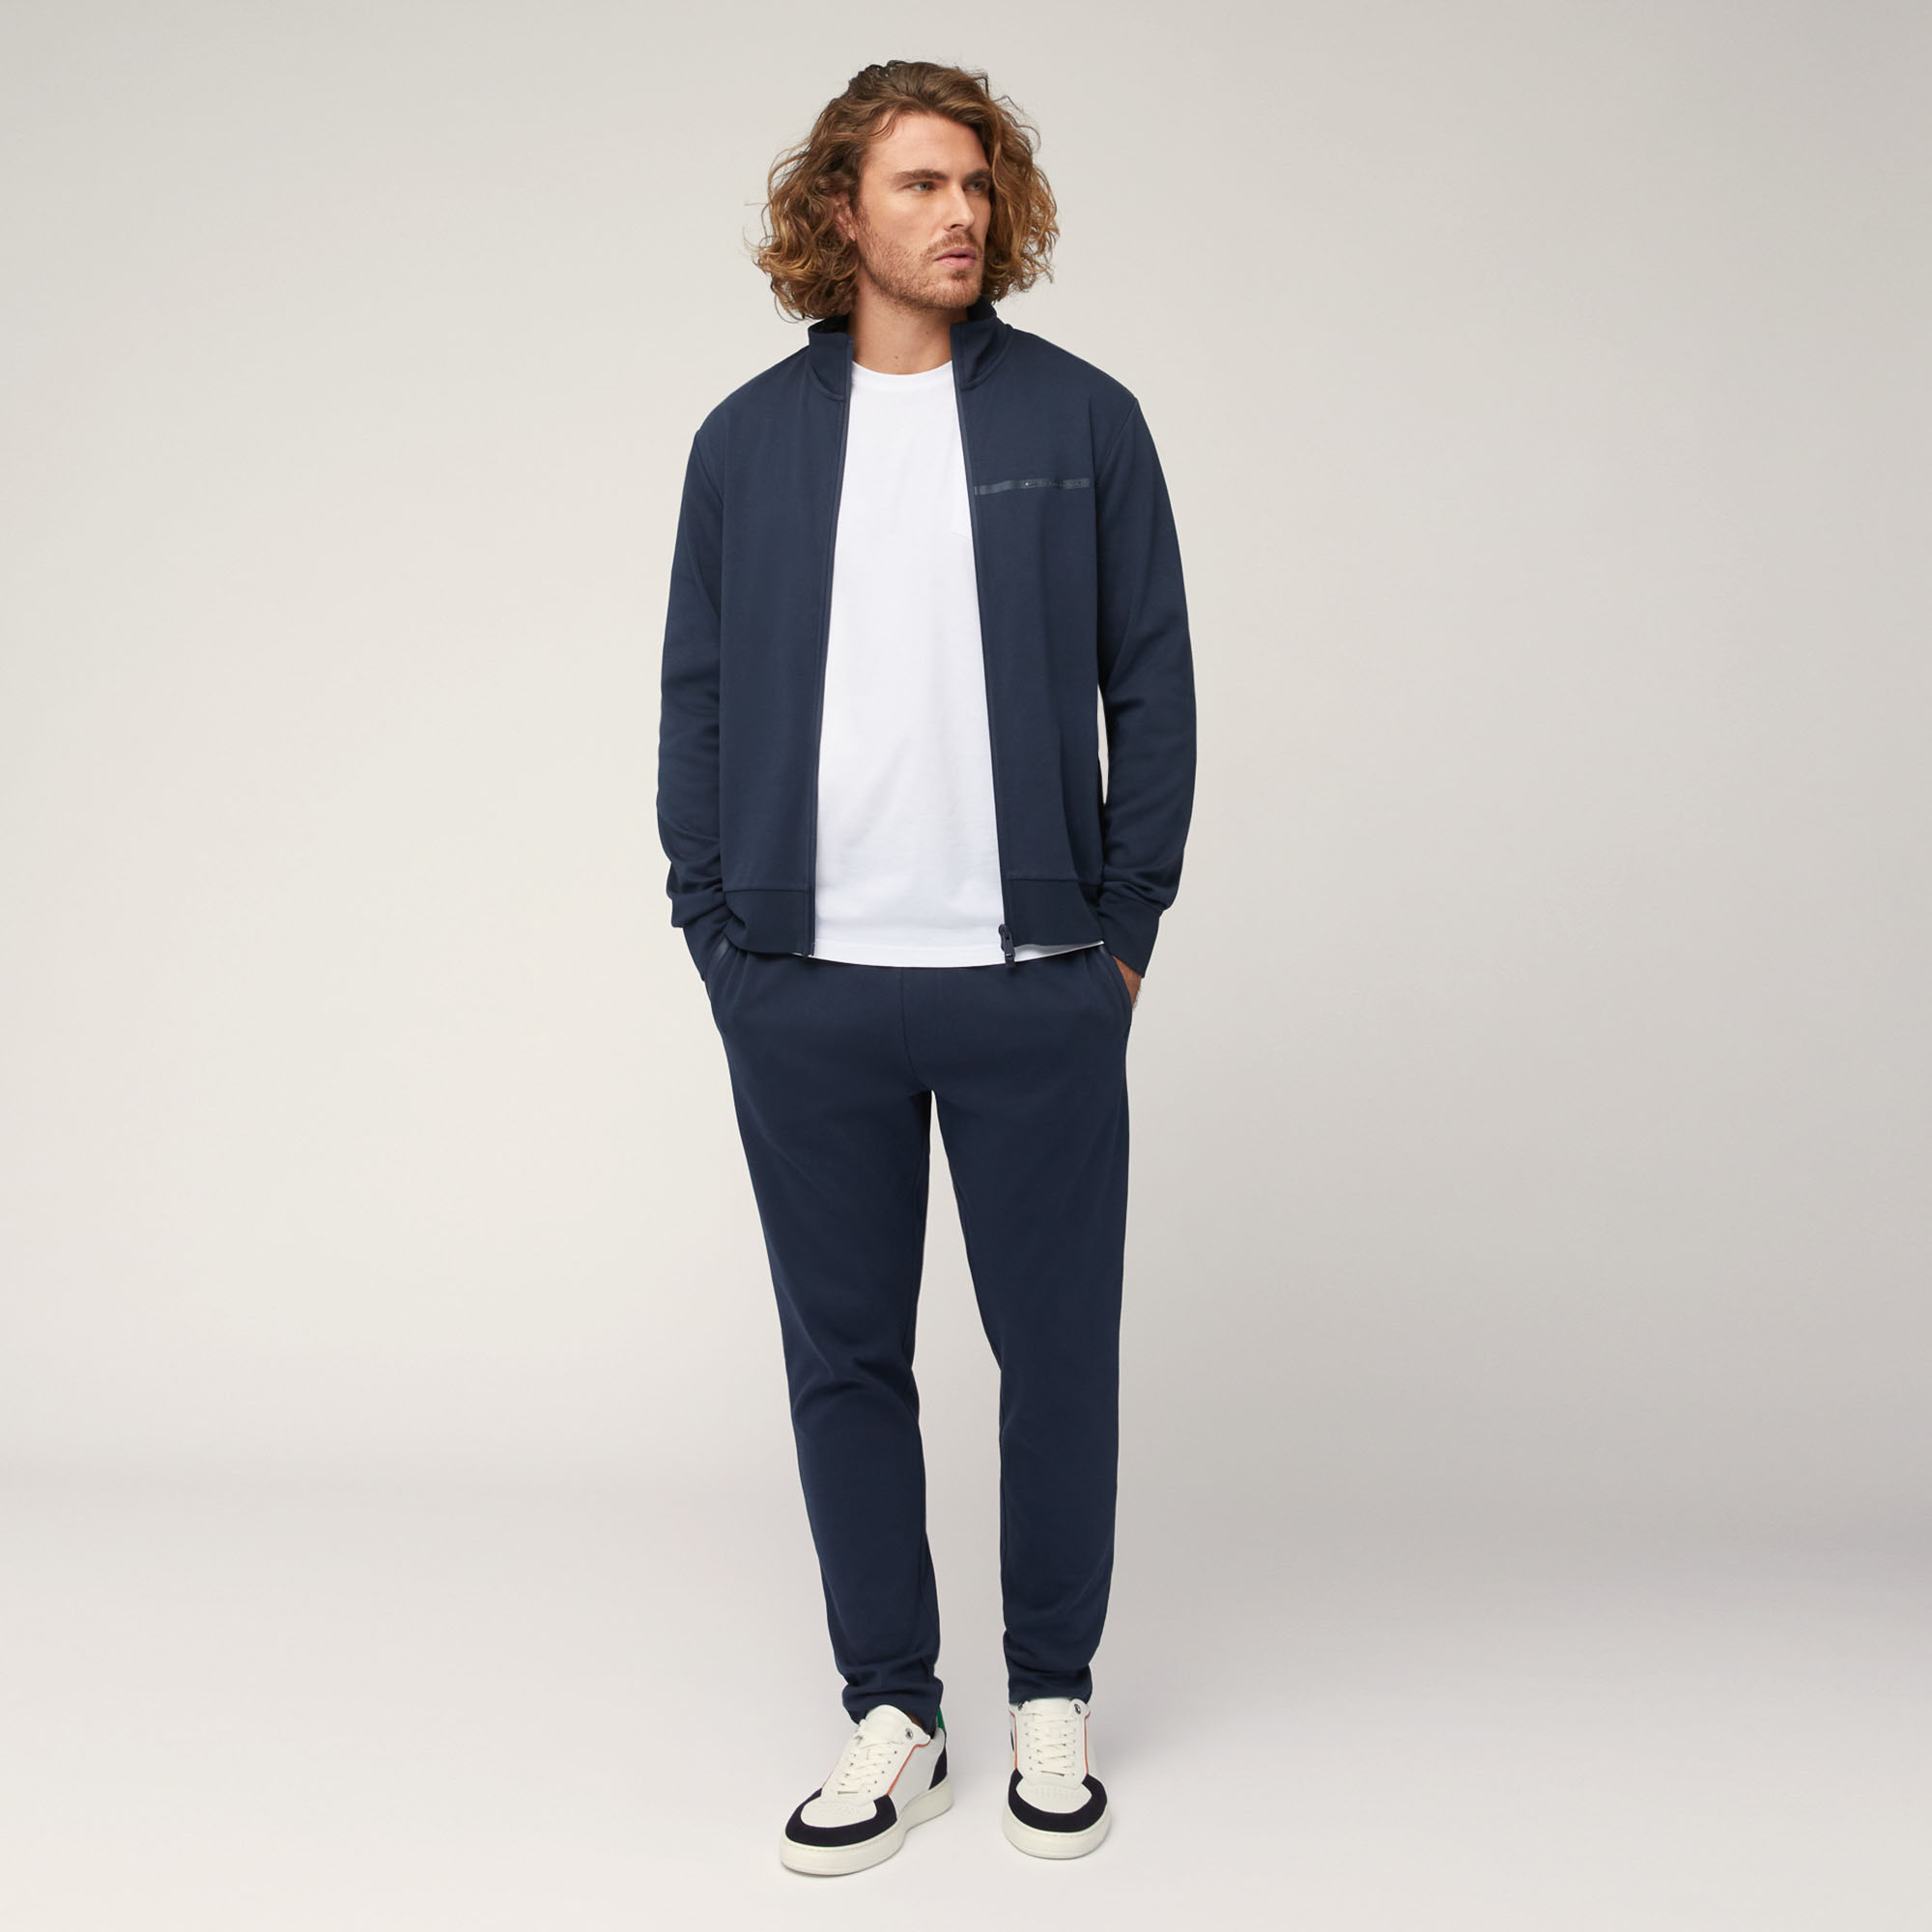 Cotton Full-Zip Sweatshirt with Heat-Sealed Details, Blue, large image number 3